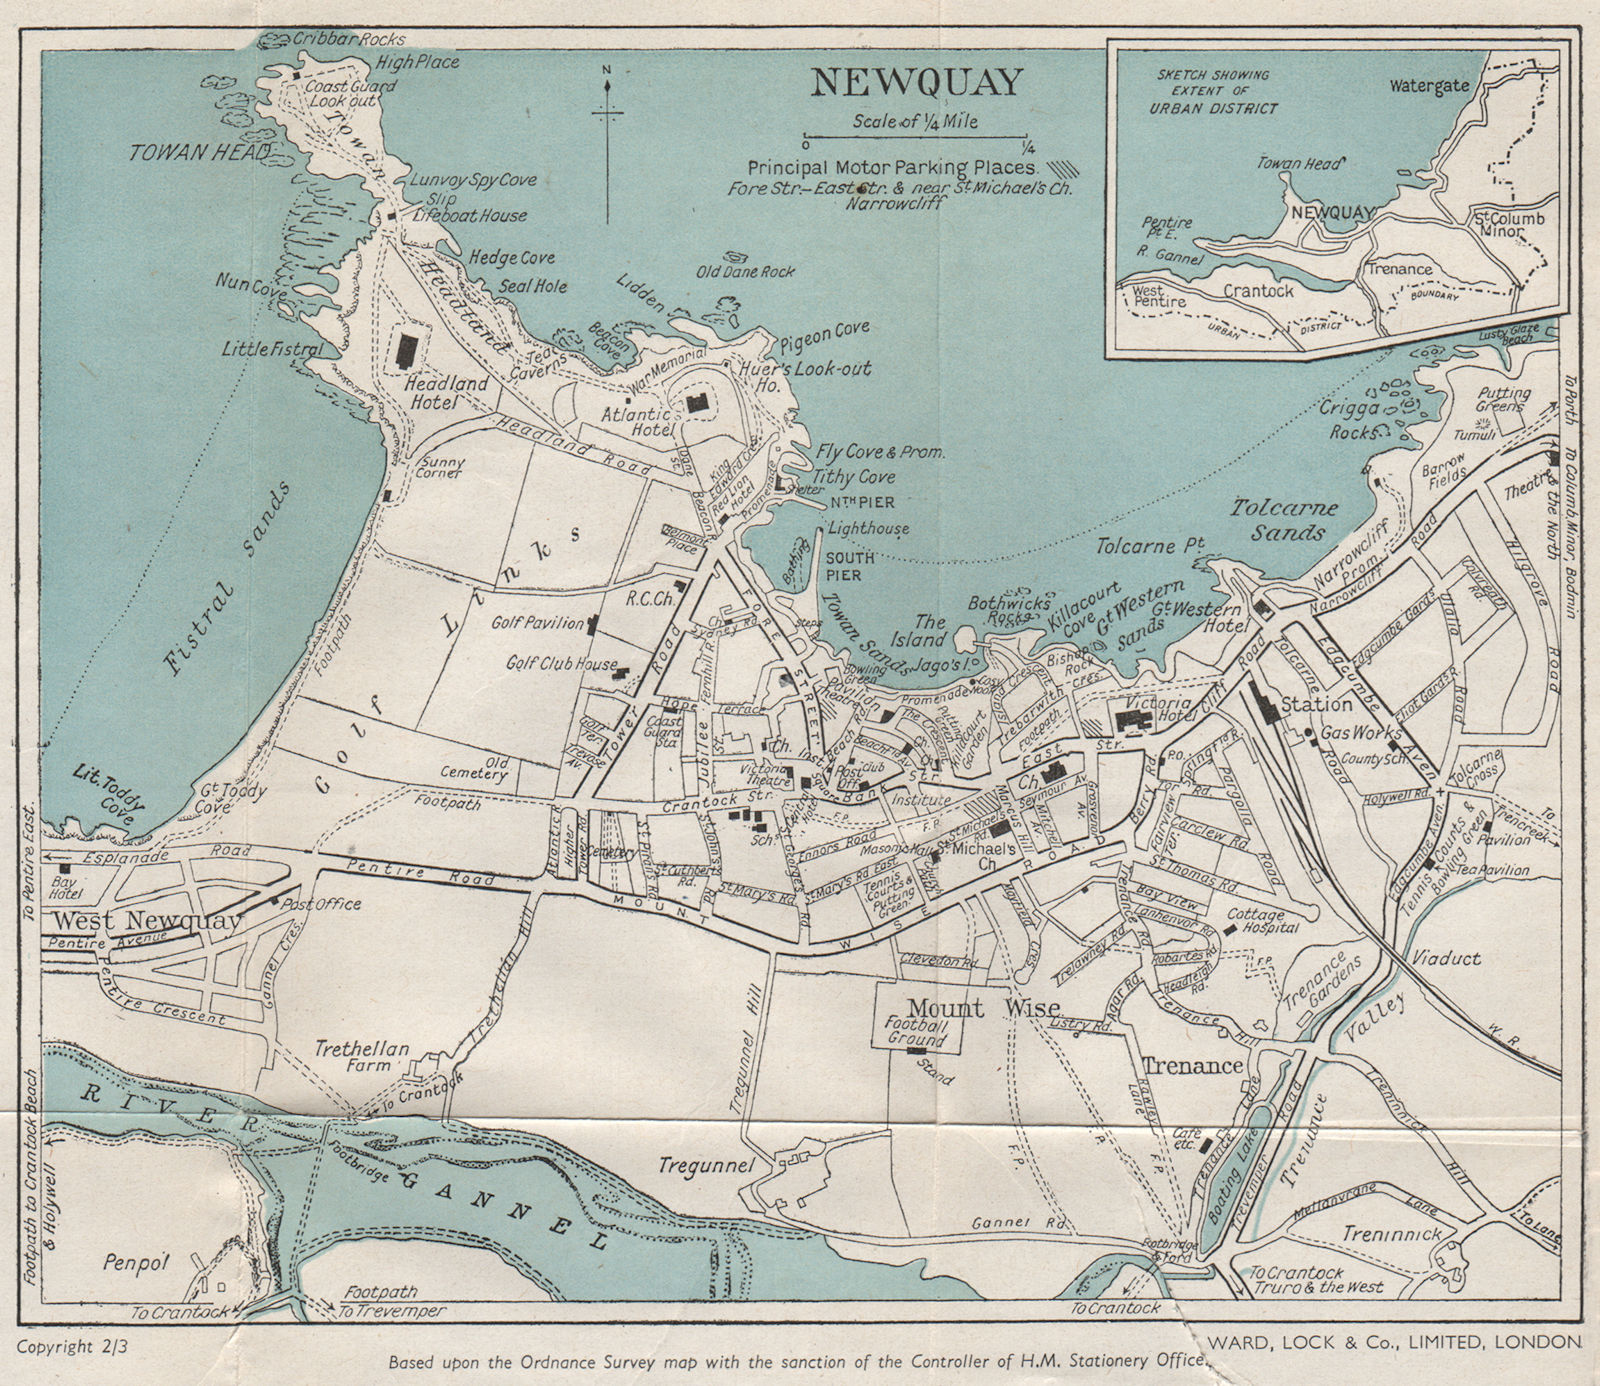 NEWQUAY vintage town/city plan. Cornwall. WARD LOCK c1955 old vintage map